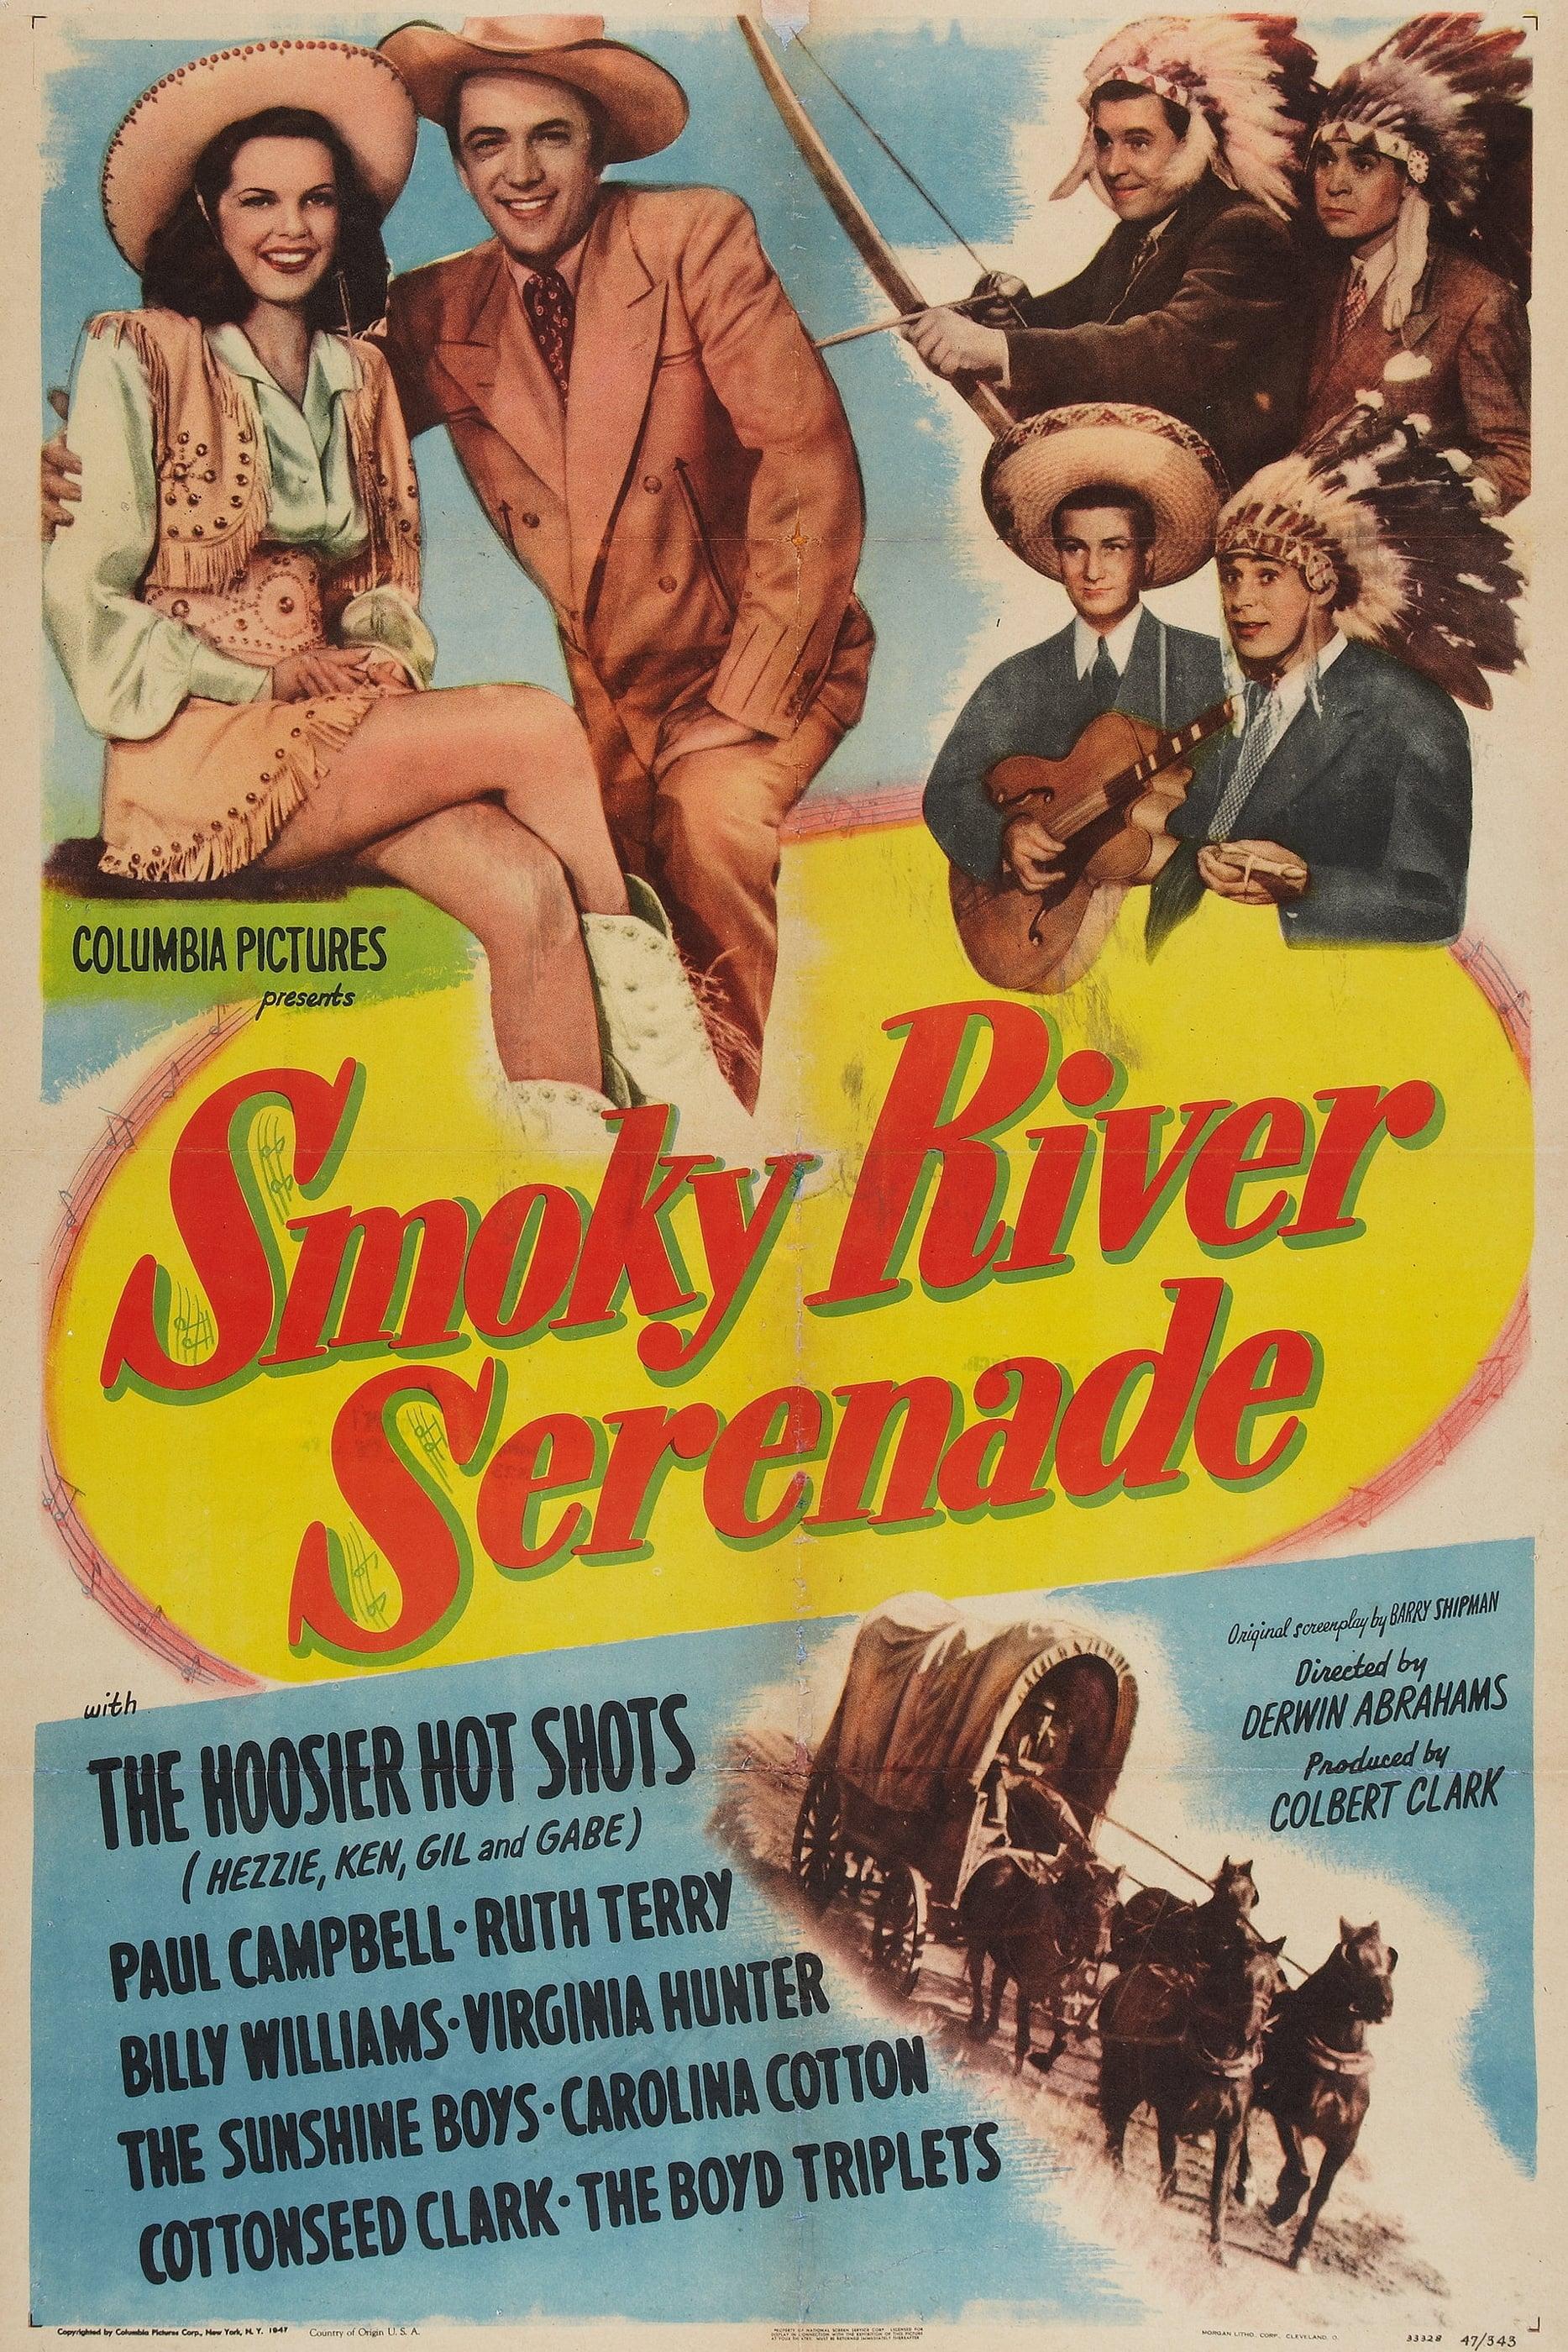 Smoky River Serenade poster